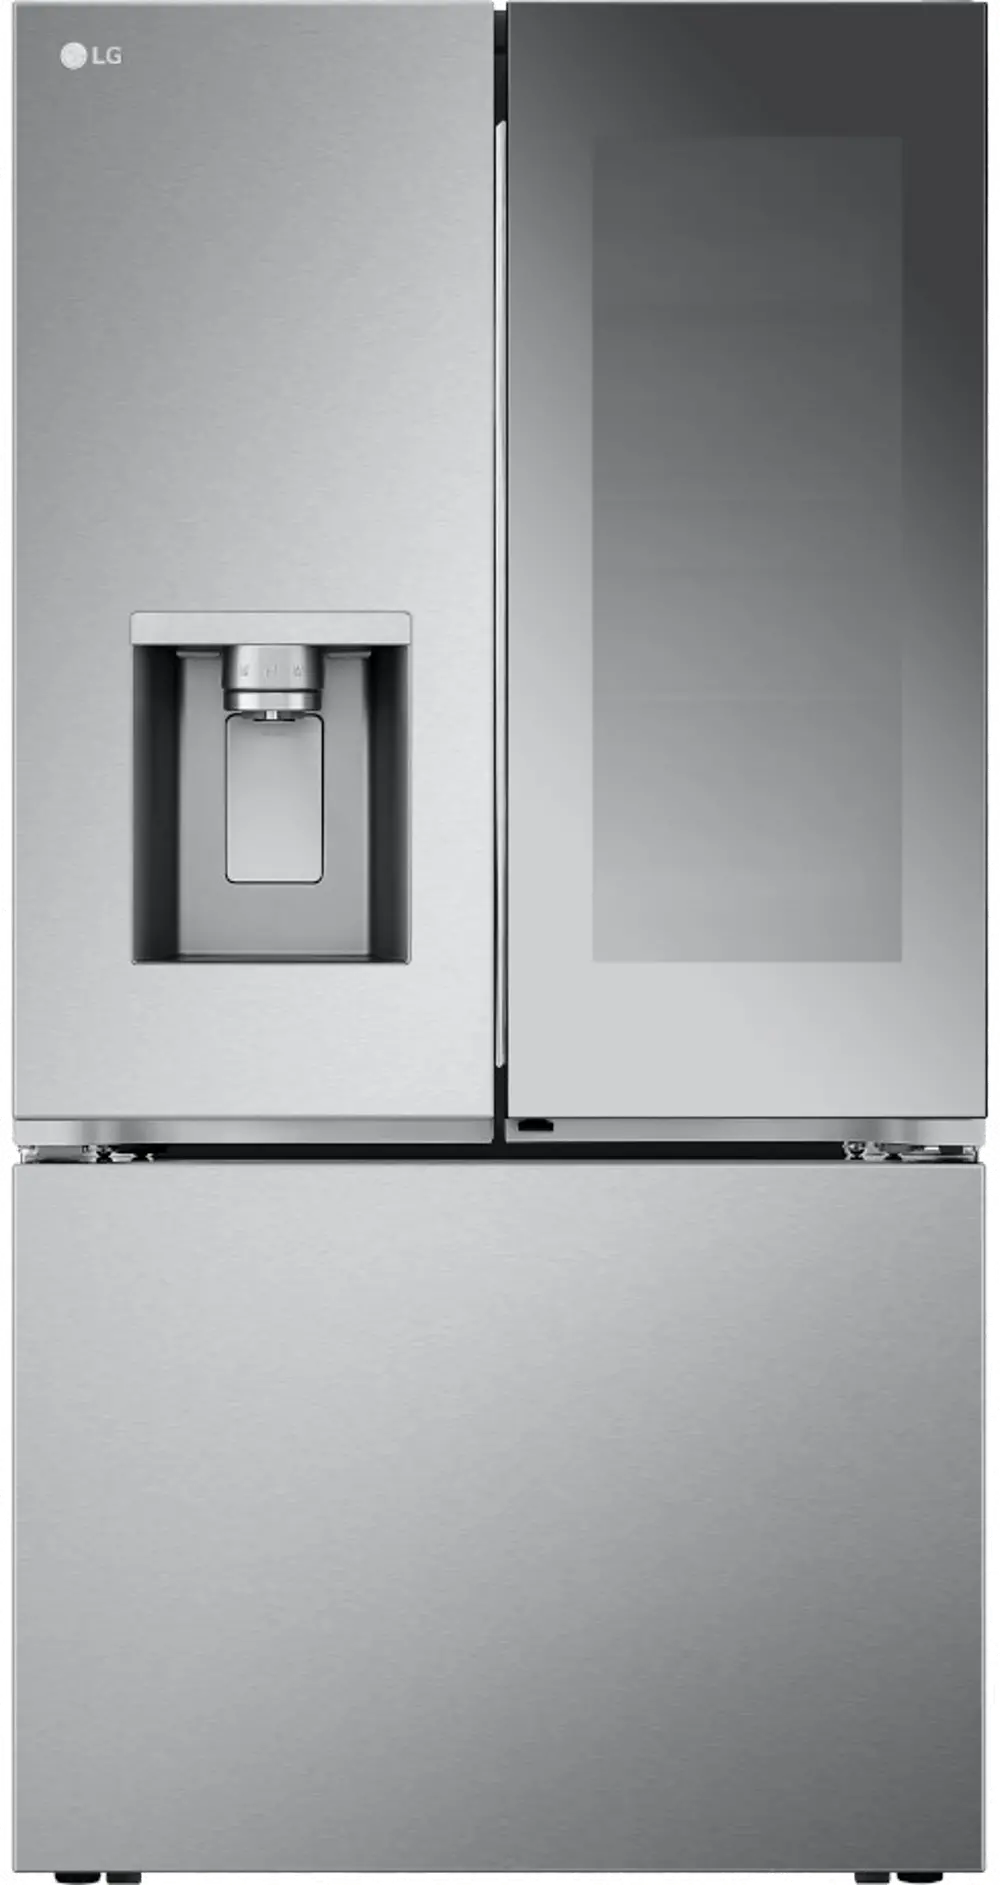 LRYKC2606S LG 26 cu ft InstaView® French Door Refrigerator - Counter Depth Stainless Steel-1